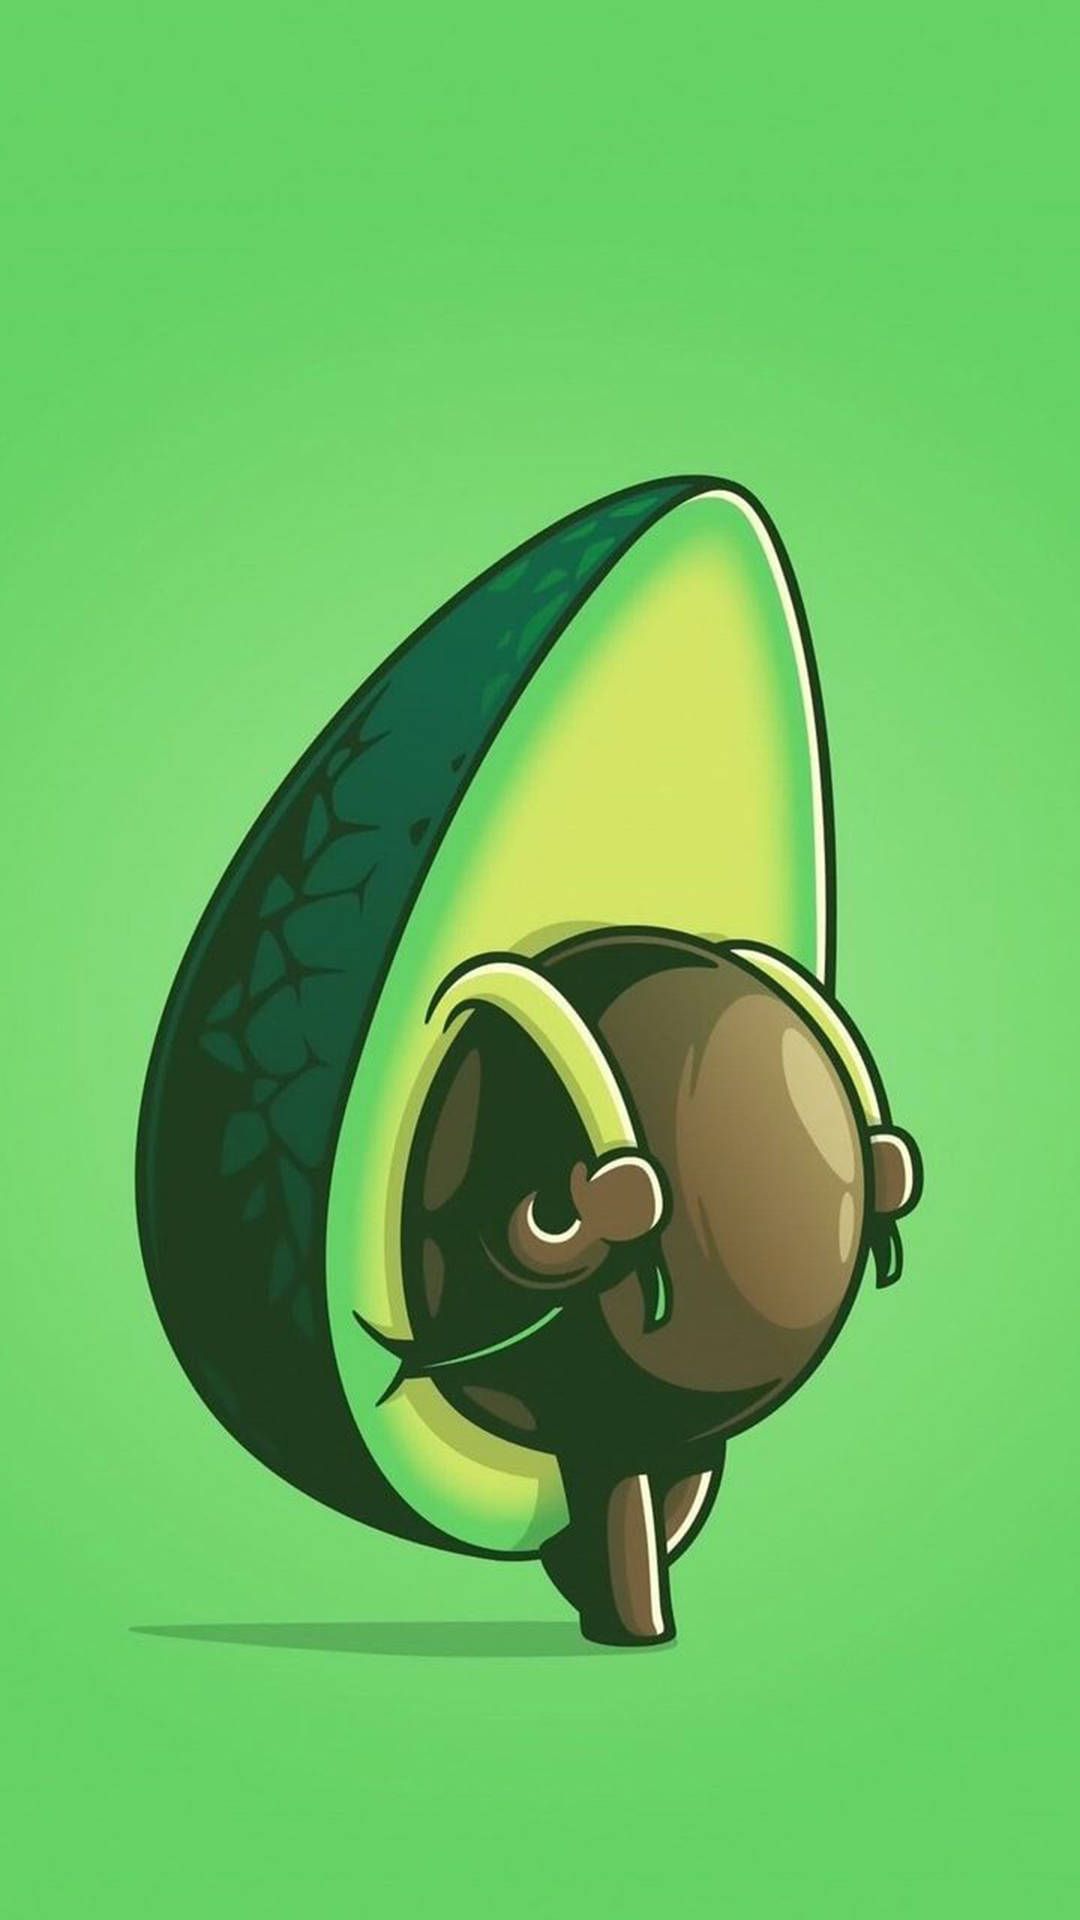 Download Cute Avocado Backpack Wallpaper